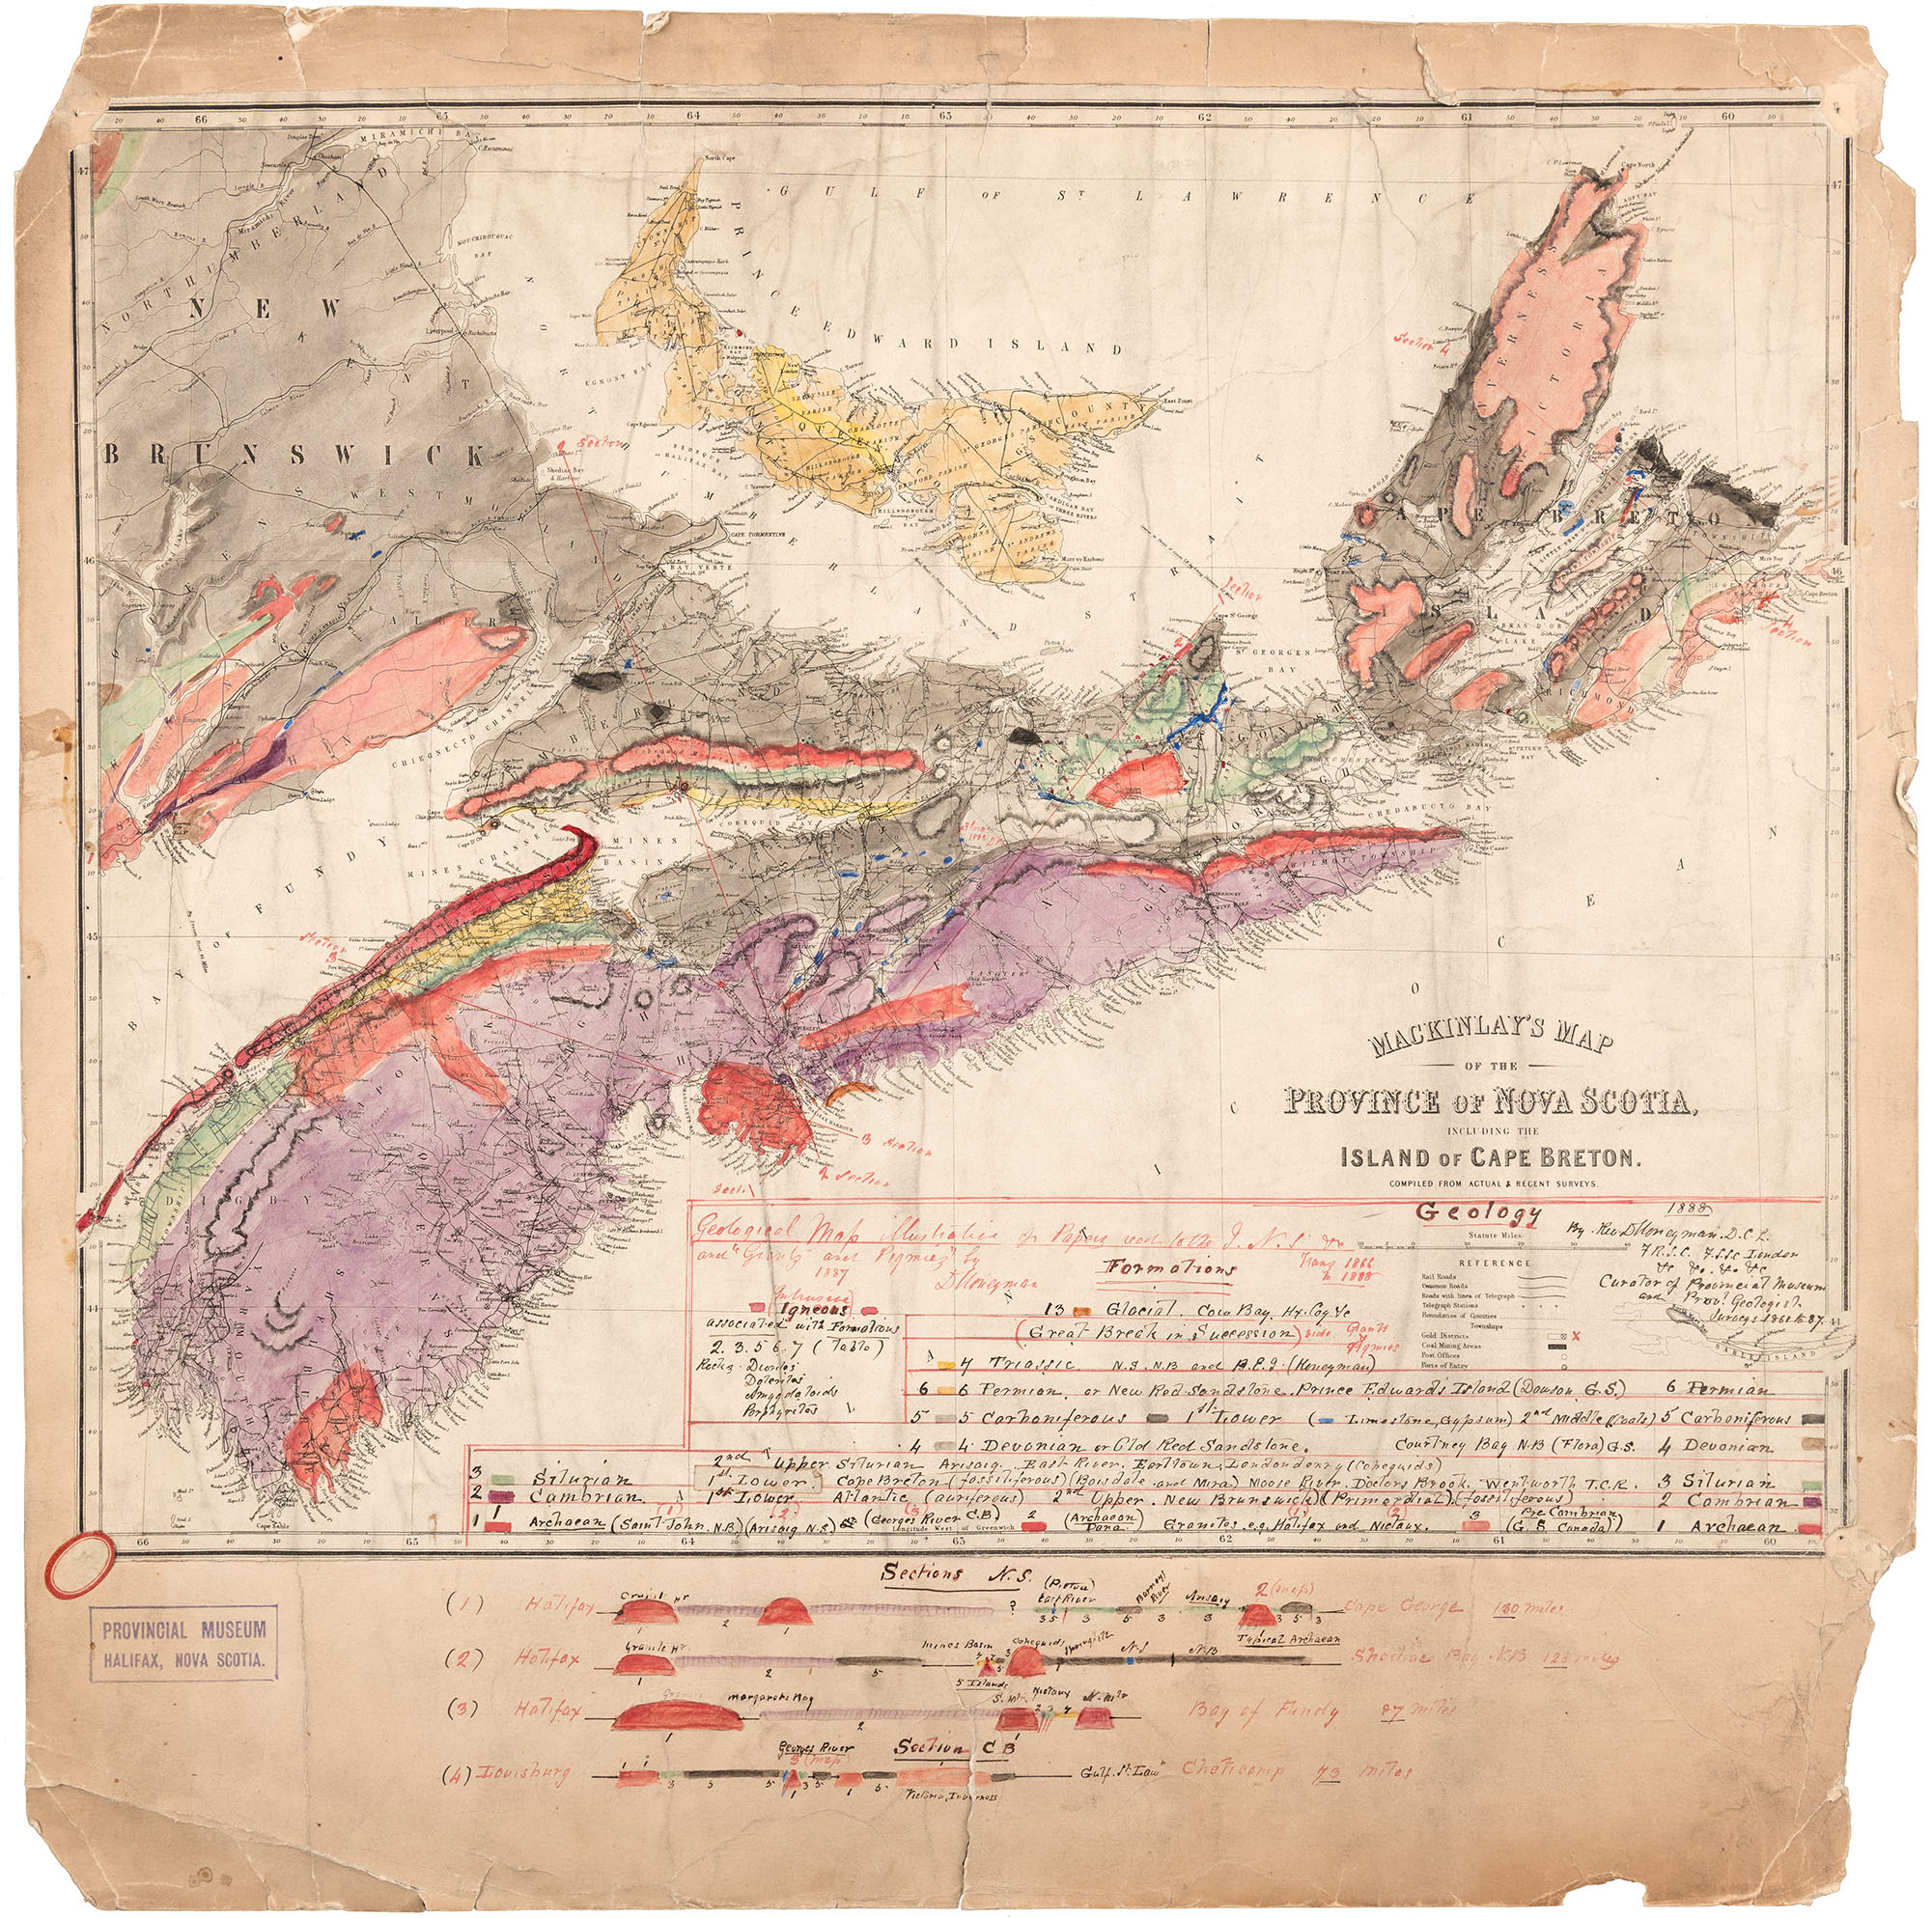 Geological Map of Nova Scotia